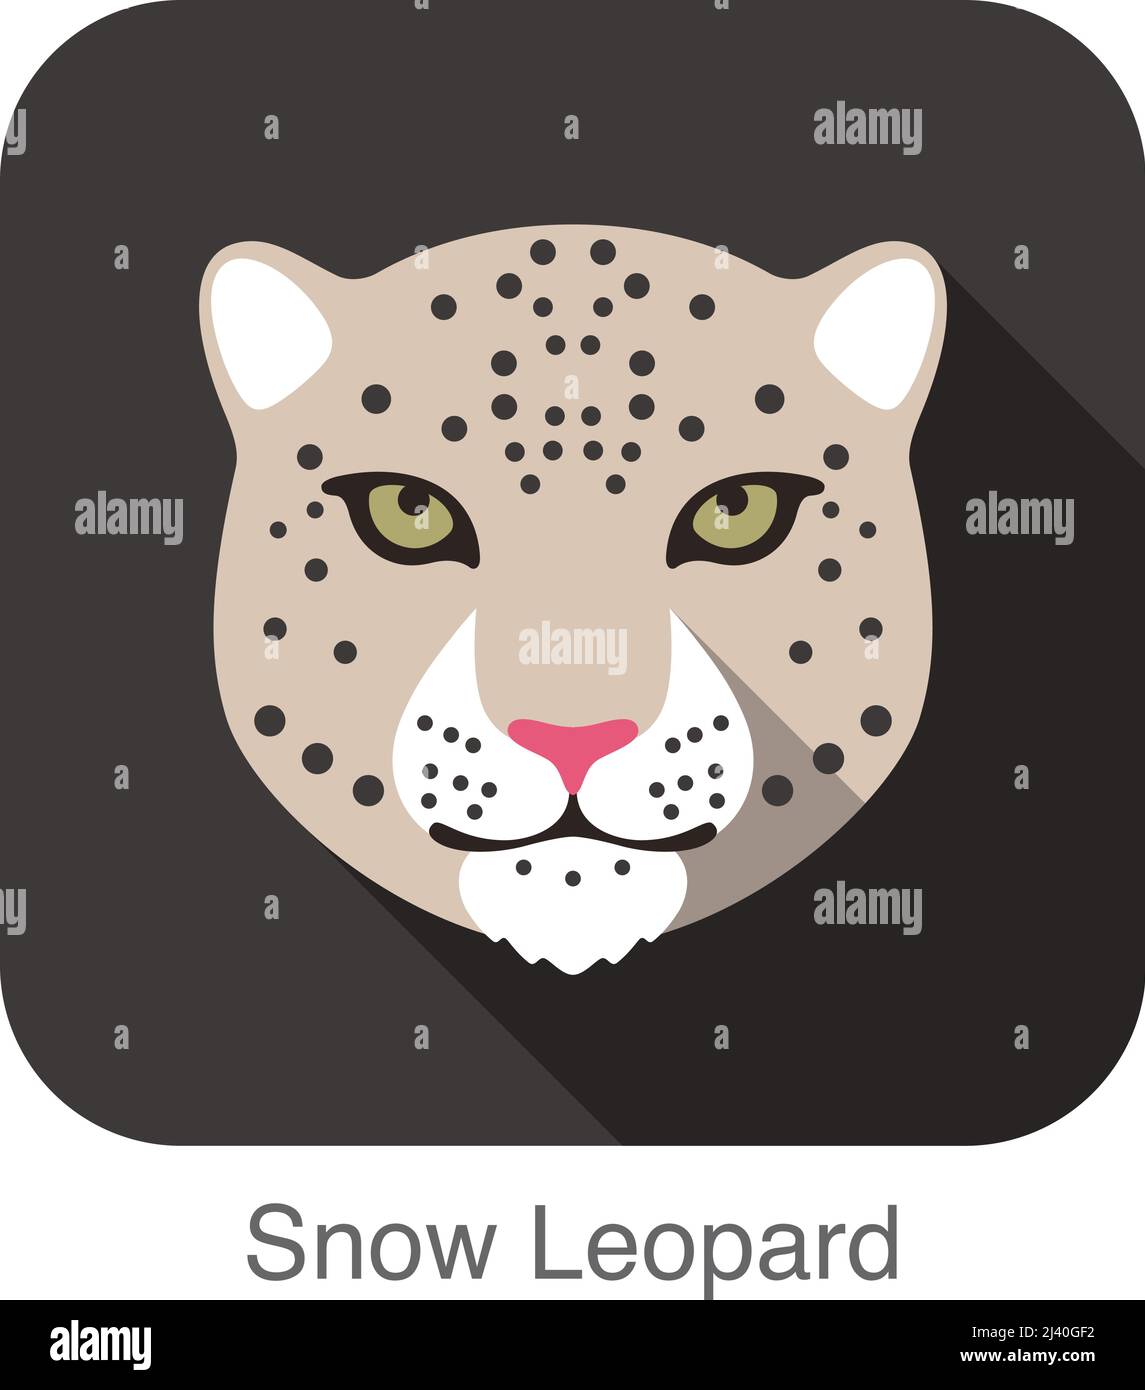 Snow leopard, Cat breed face cartoon flat icon design Stock Vector